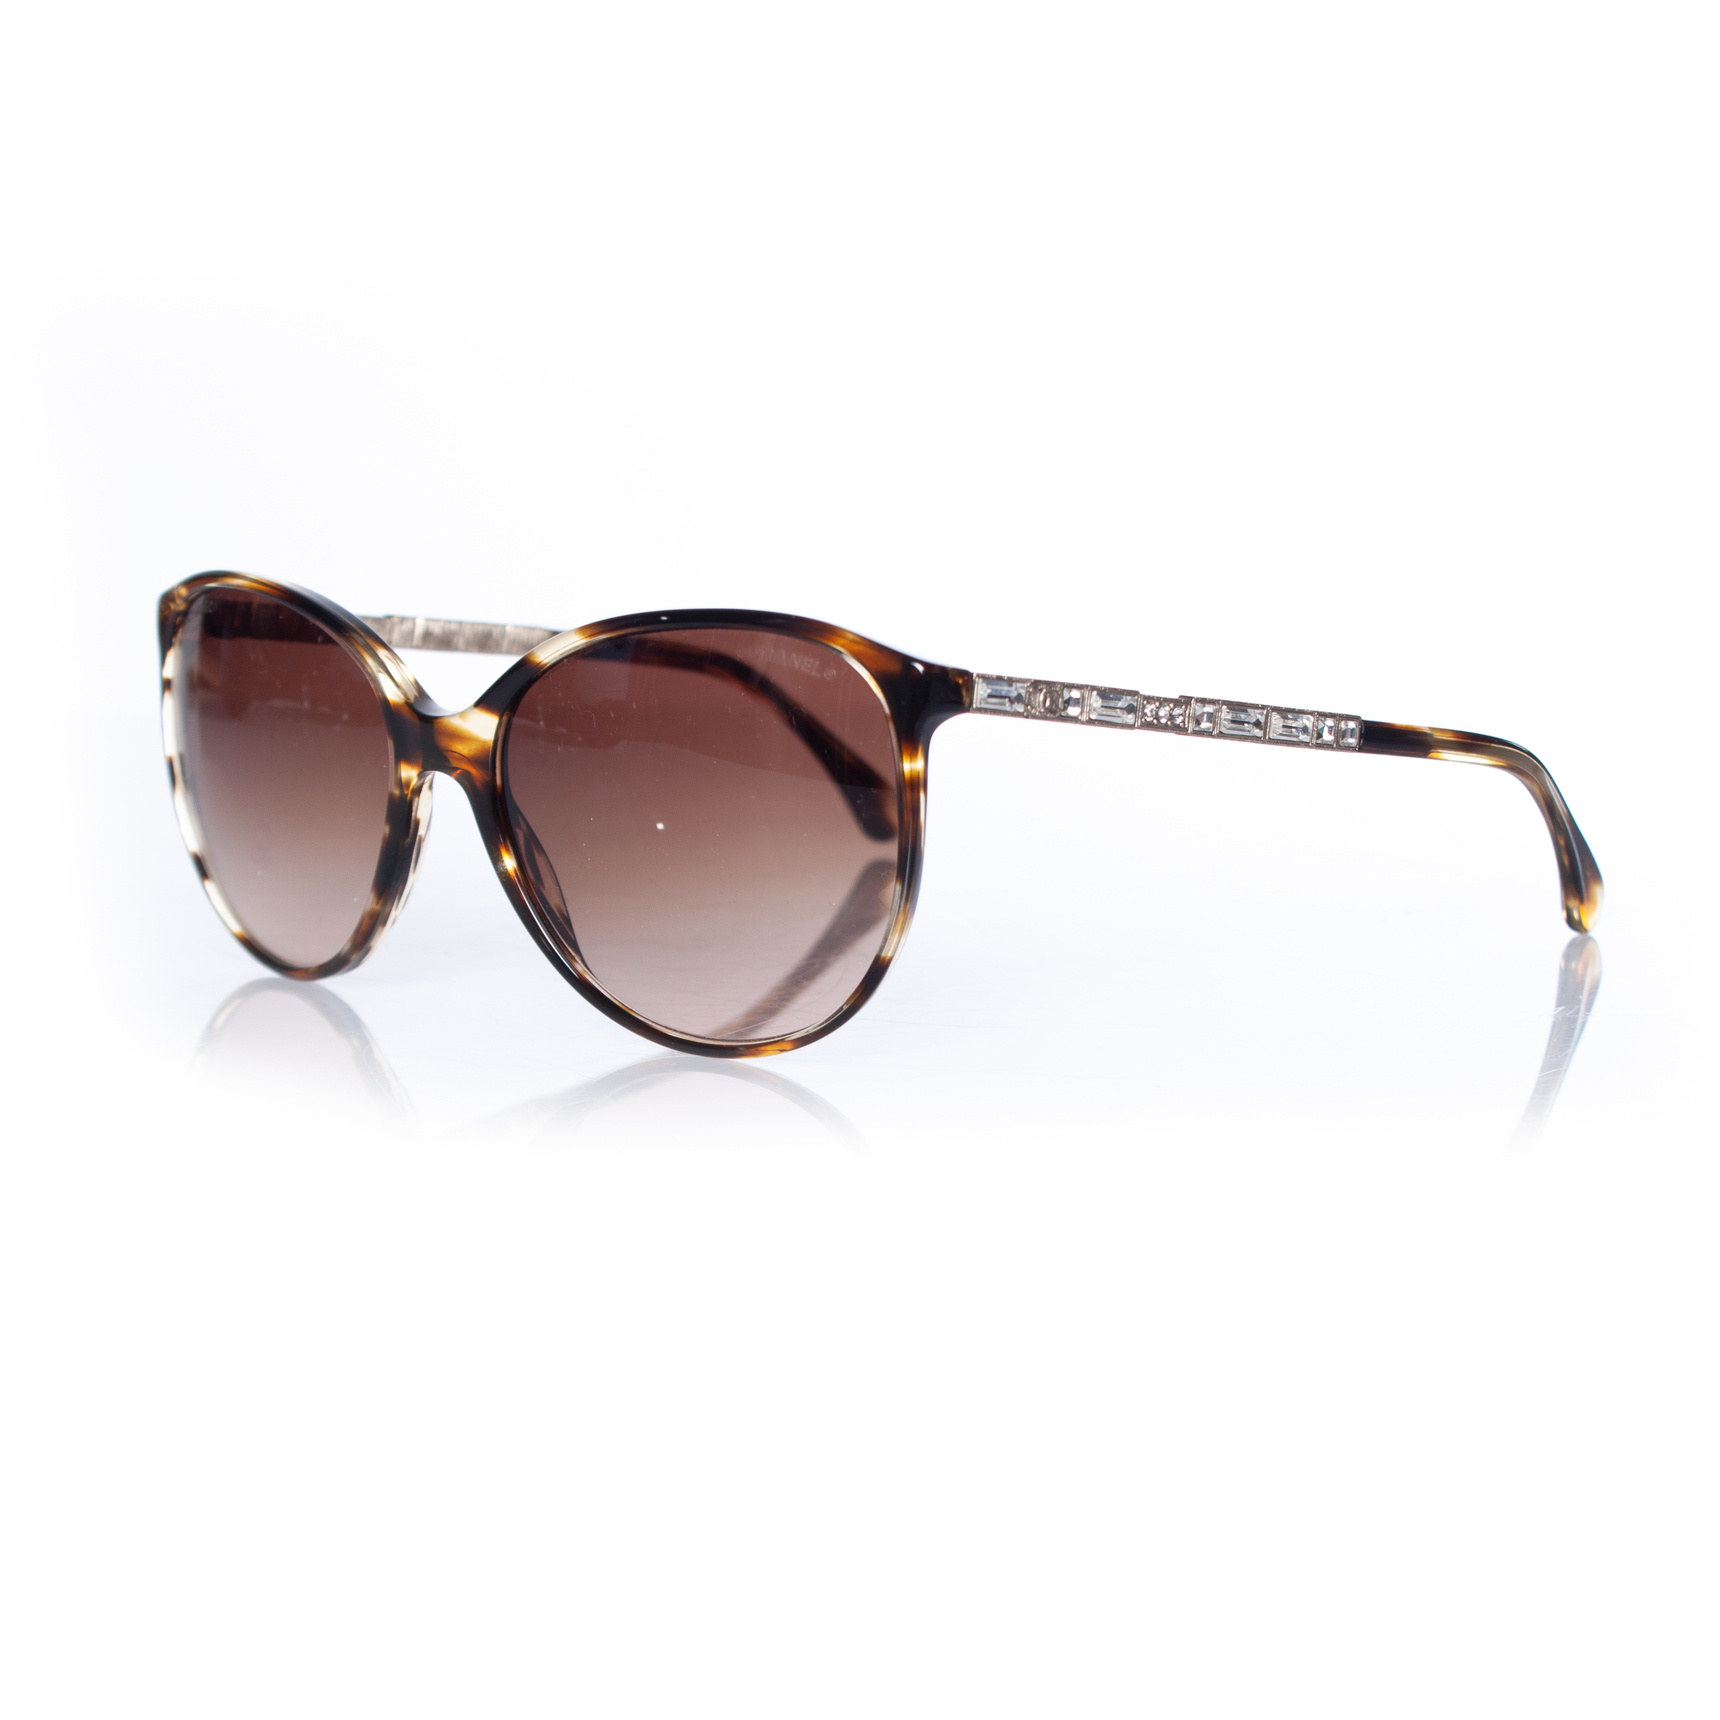 Chi tiết 61 về chanel cat eye summer sunglasses mới nhất   cdgdbentreeduvn